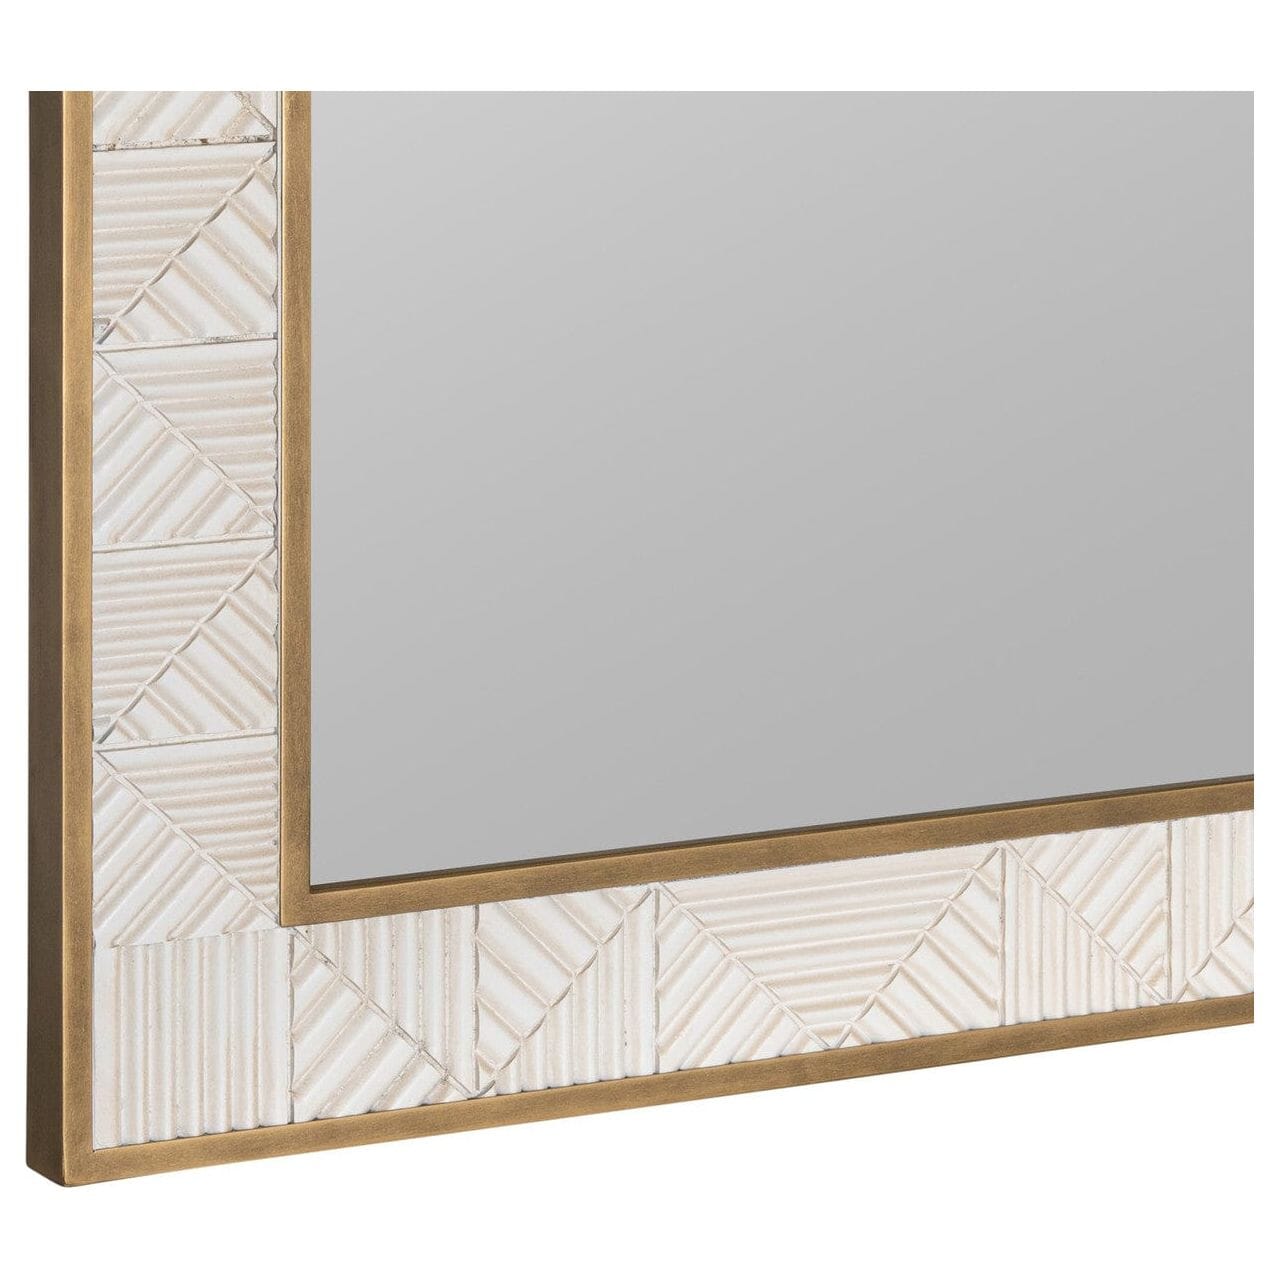 Wall Mirror - Distinct Mirrors Lustré Blanc 28W x 40H